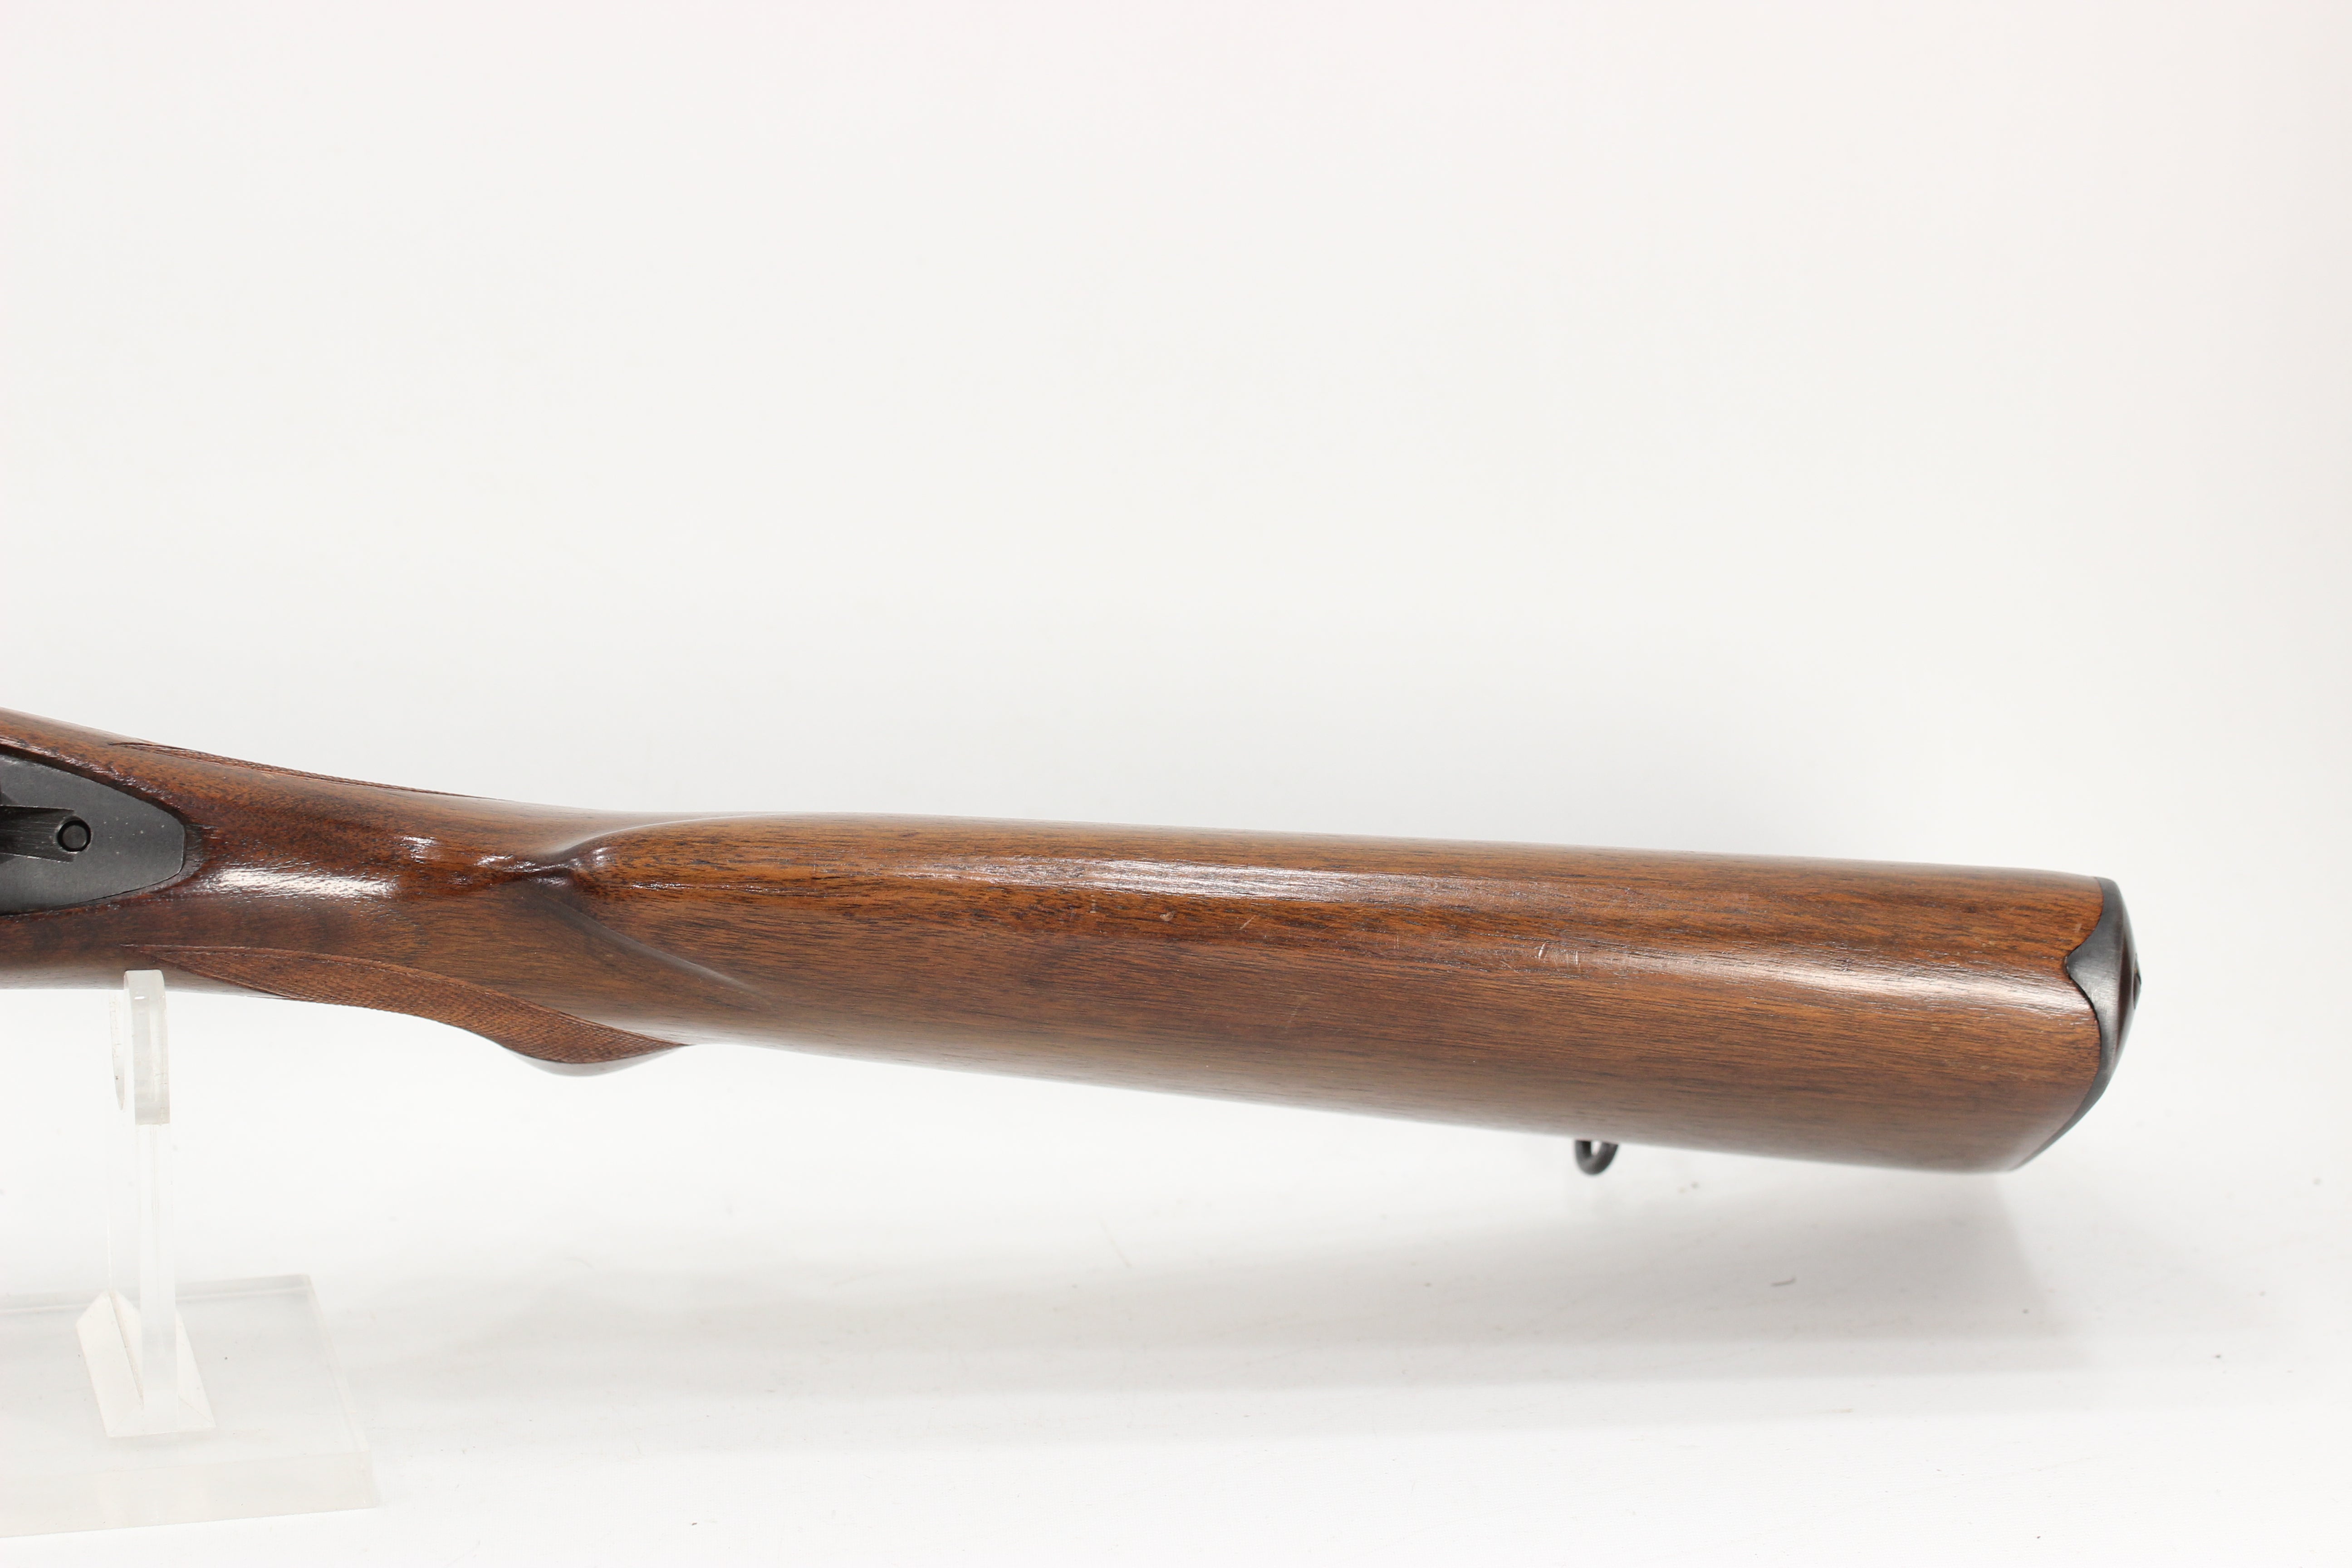 .257 Roberts Standard Rifle - 1949